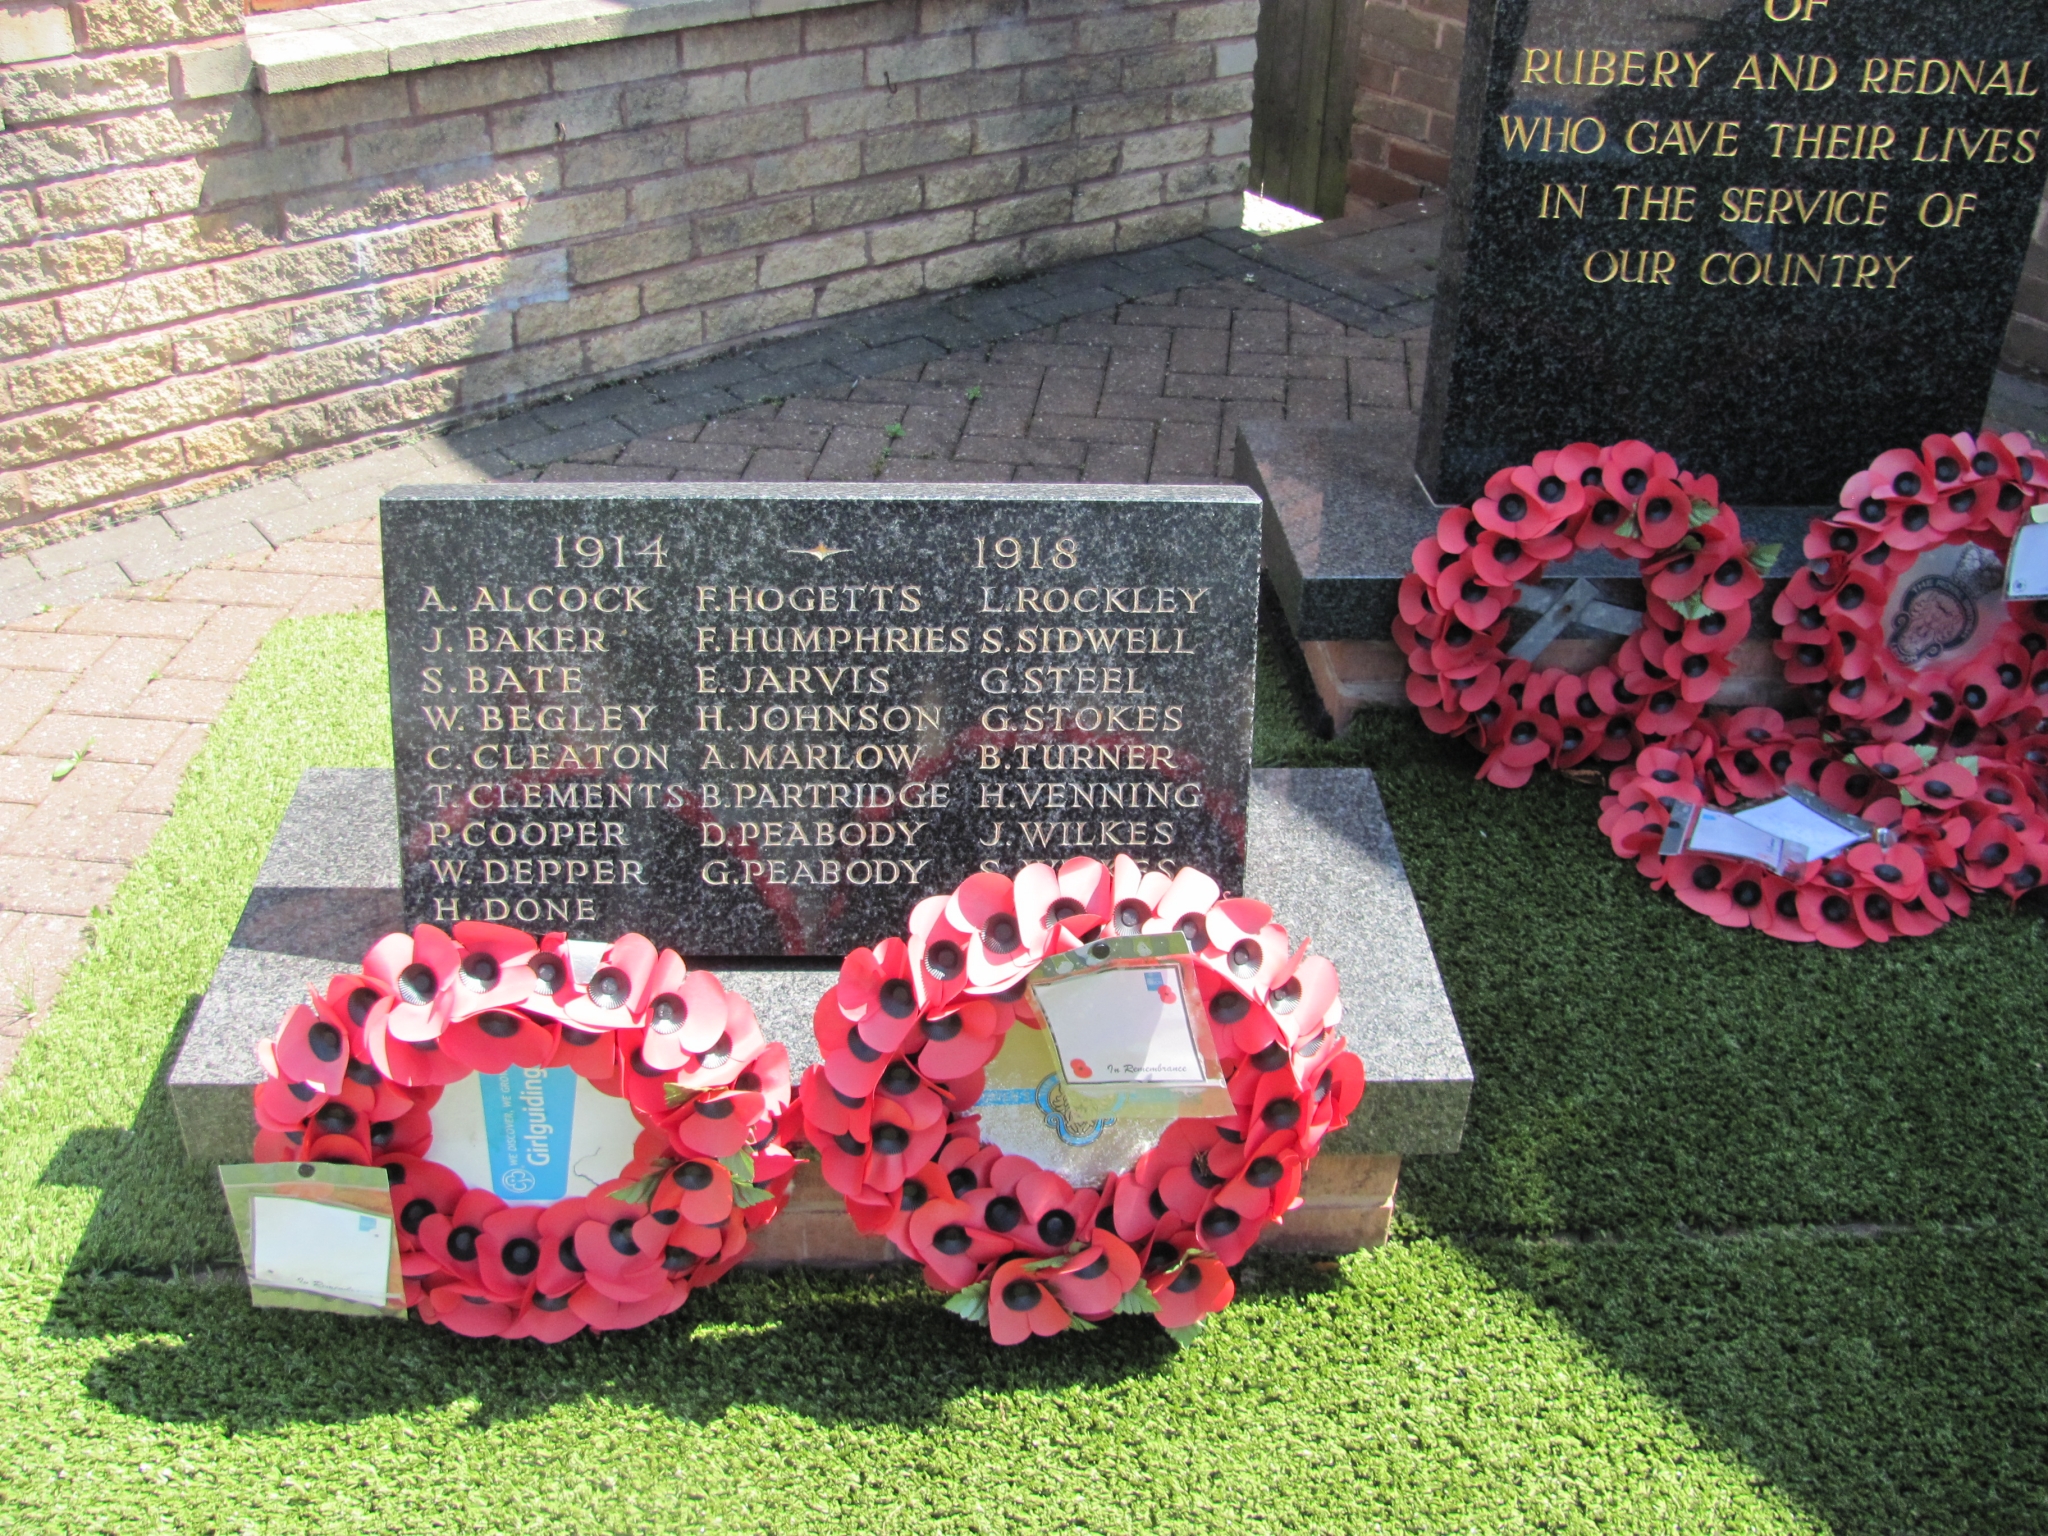 Rubery Rednal Royal British Legion War Memorials Online